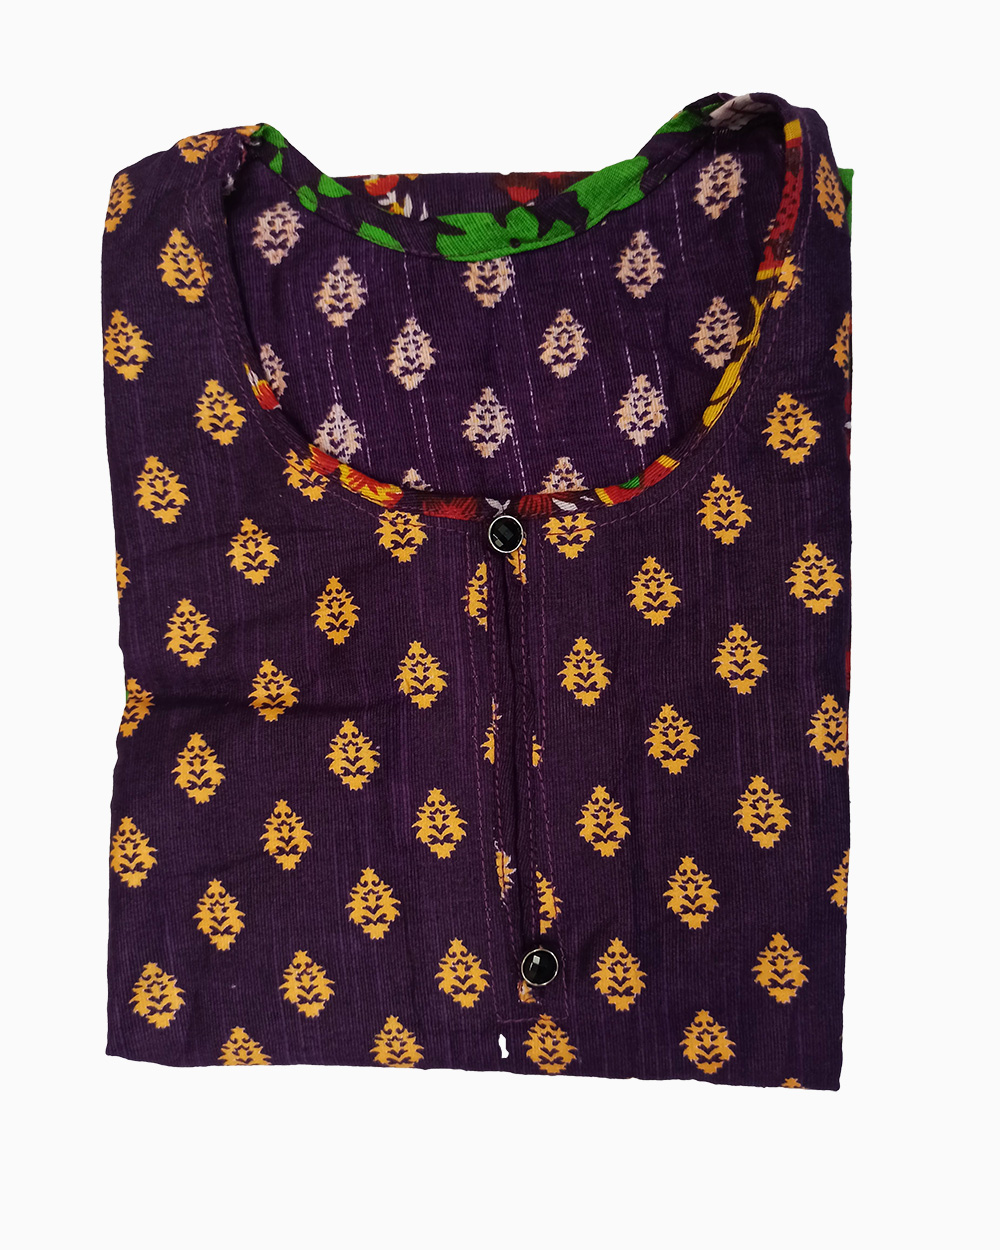 khaddar shirts-latest winter designer collection-floral printed khaddar-multi color khaddar shirt designs-purple-red-green (10)